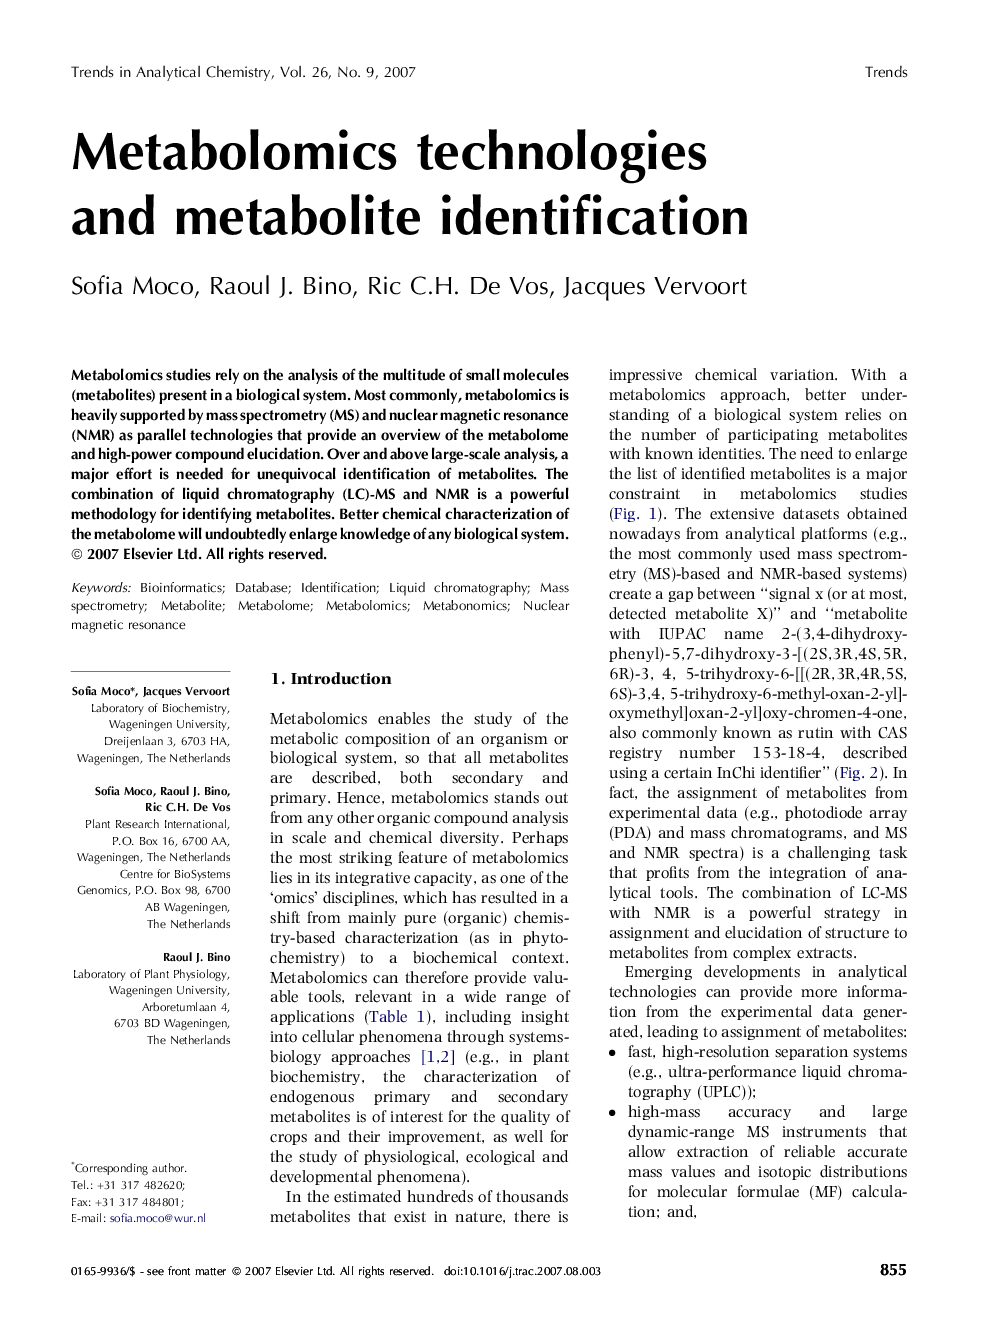 Metabolomics technologies and metabolite identification